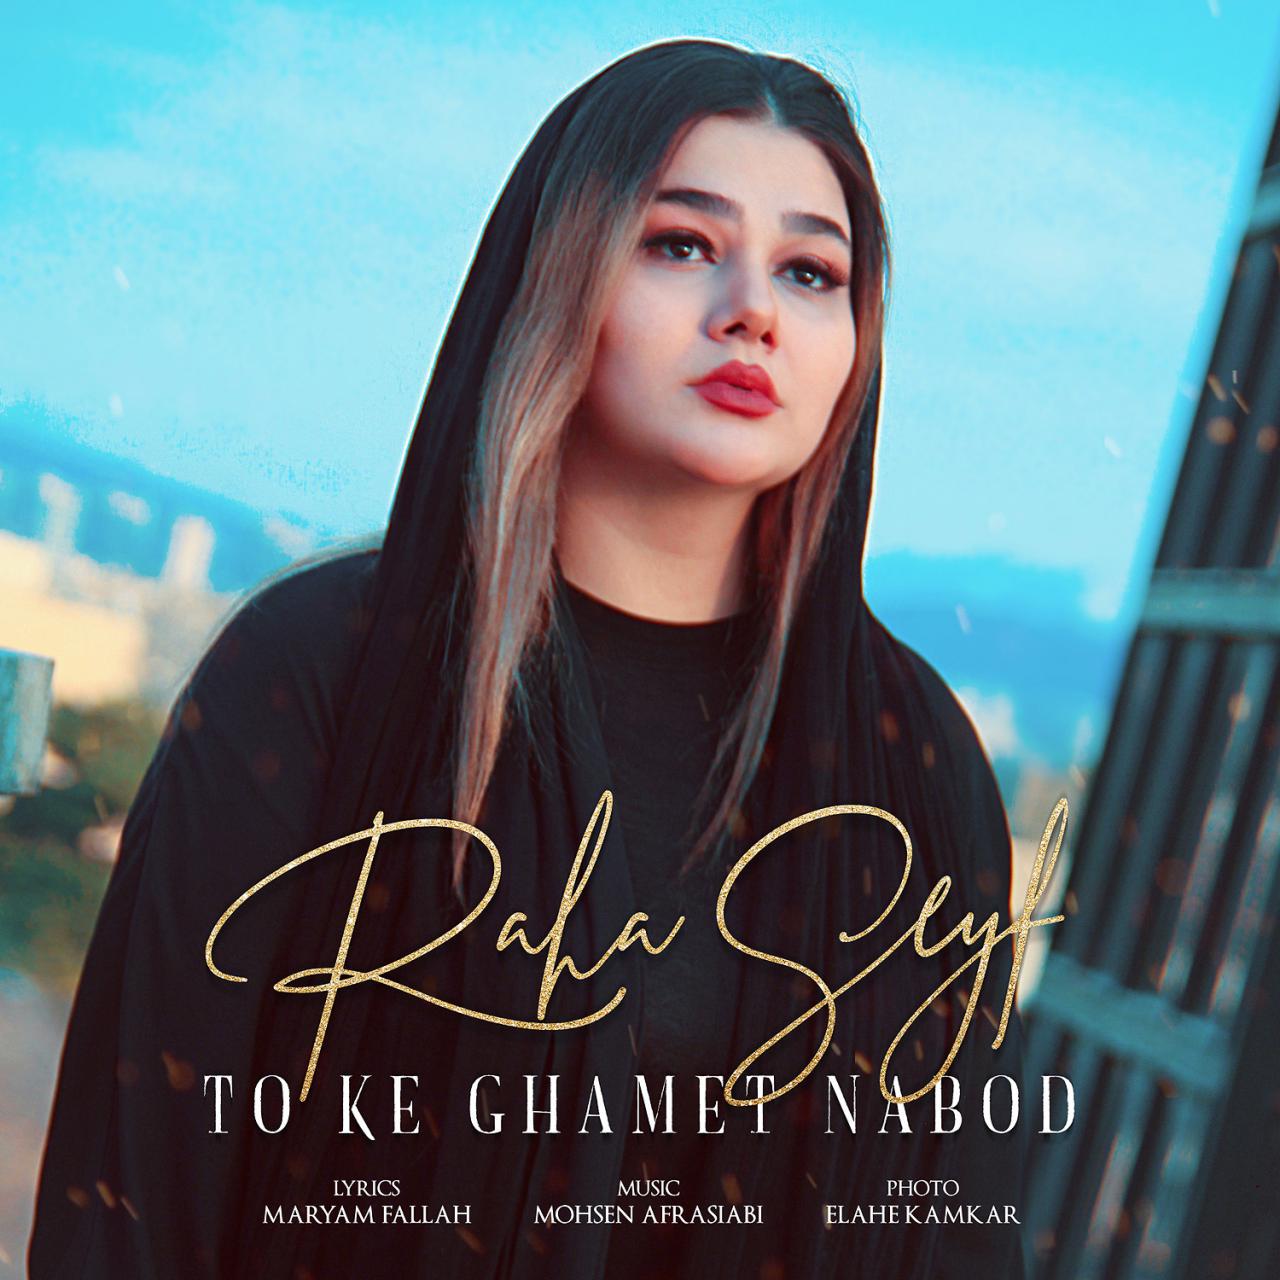  دانلود آهنگ جدید رها سیف - تو که غمت نبود | Download New Music By Raha Seyf - To Ke Ghamet Nabod